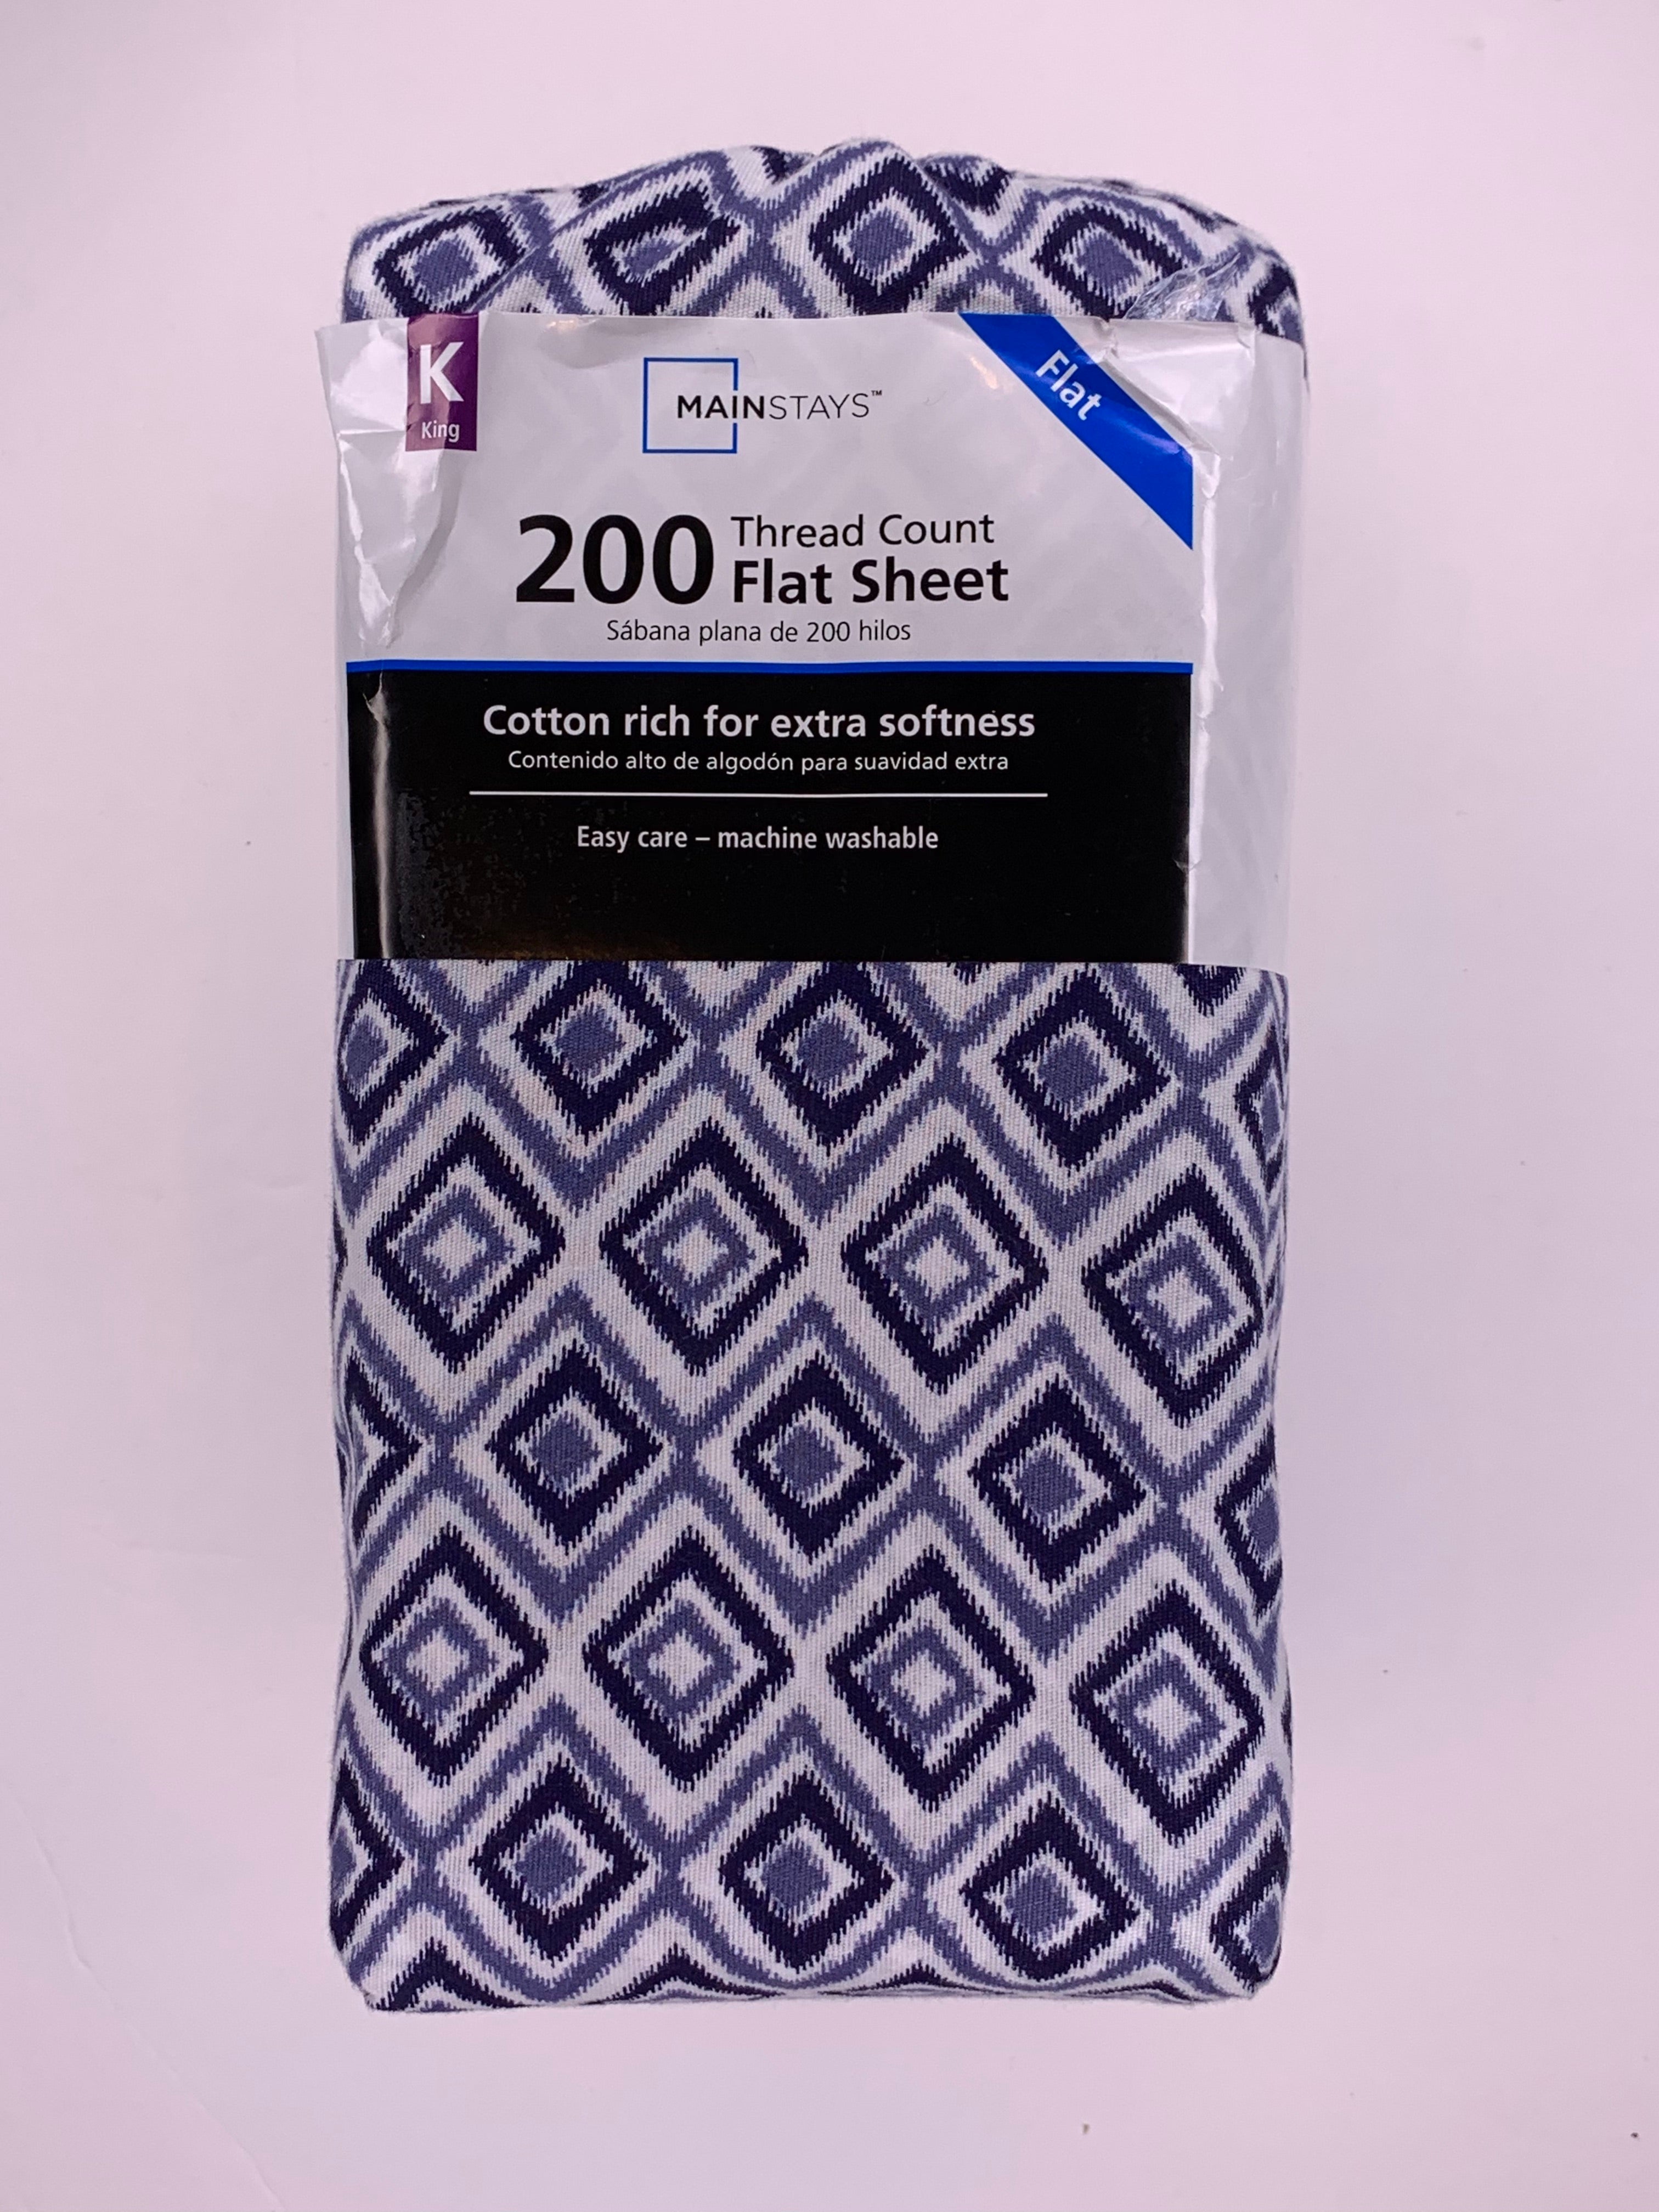 Walmart Mainstays King 200 Thread Count Flat Sheet Blue Square Cotton Soft